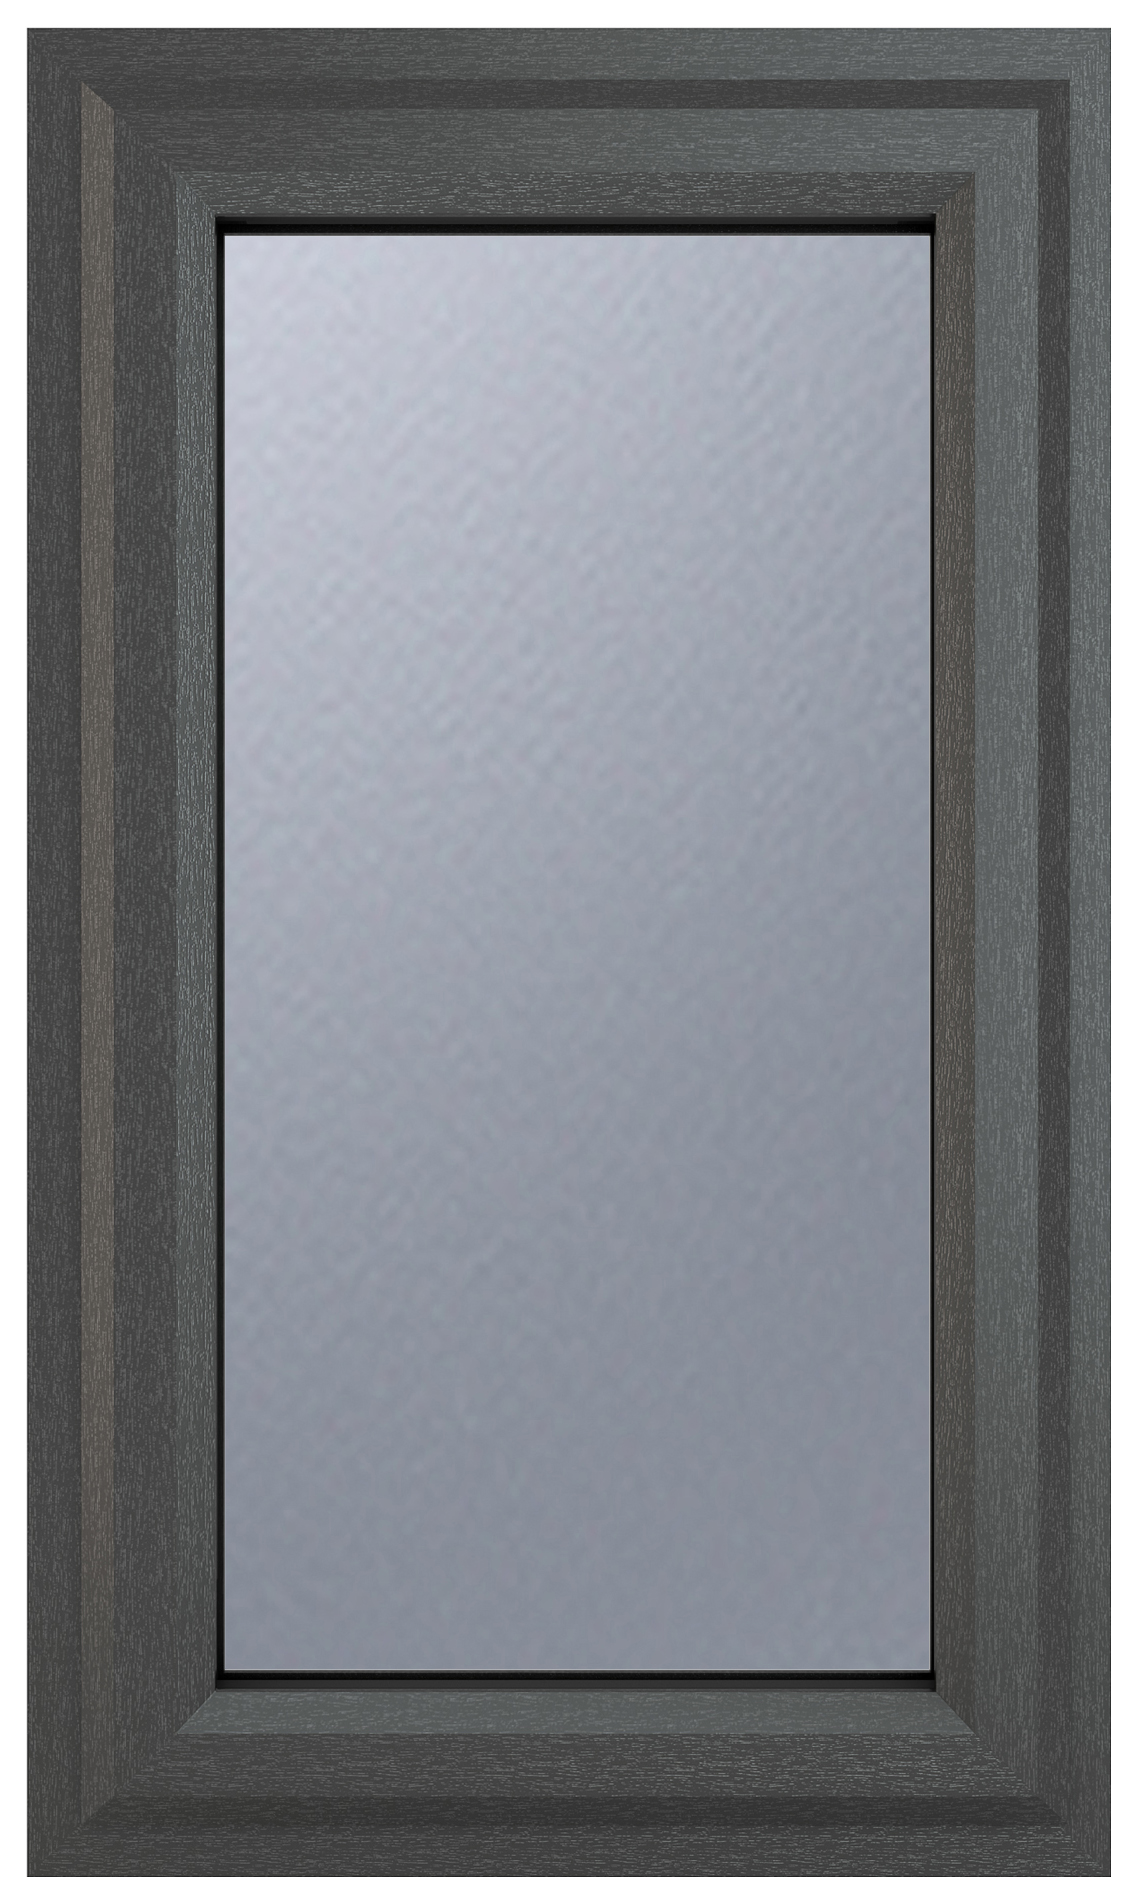 Crystal uPVC Grey Left Hung Obscure Double Glazed Window - 610 x 1115mm